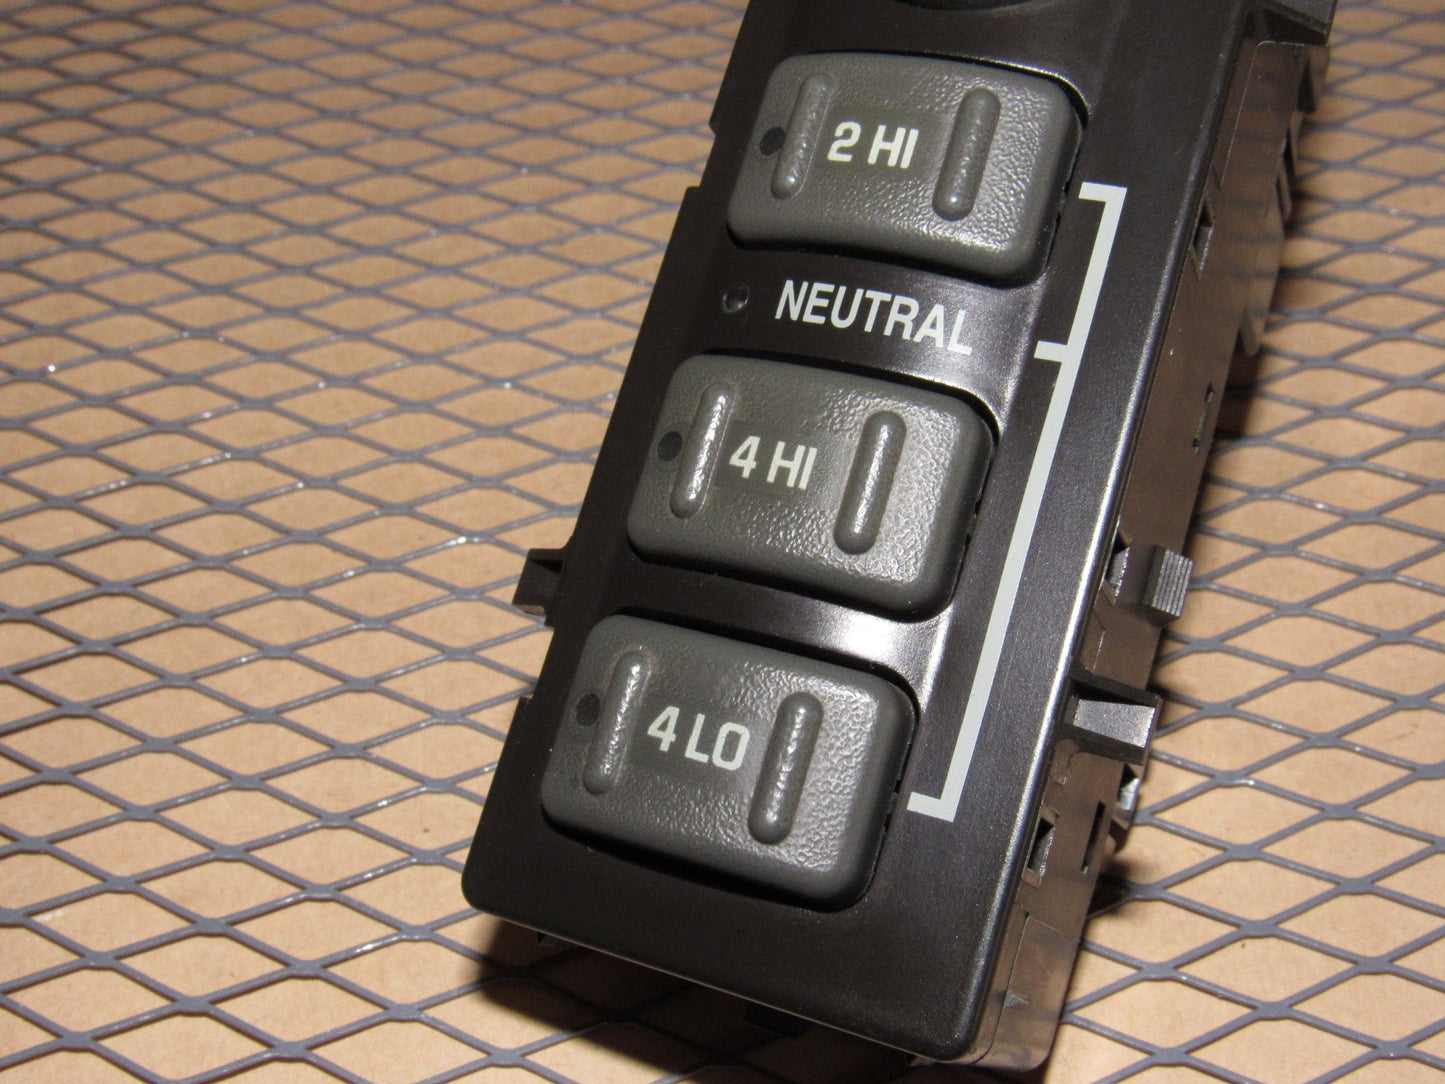 00 01 02 Chevrolet Suburban OEM Auto 4WD 2WD Transfer Case Switch